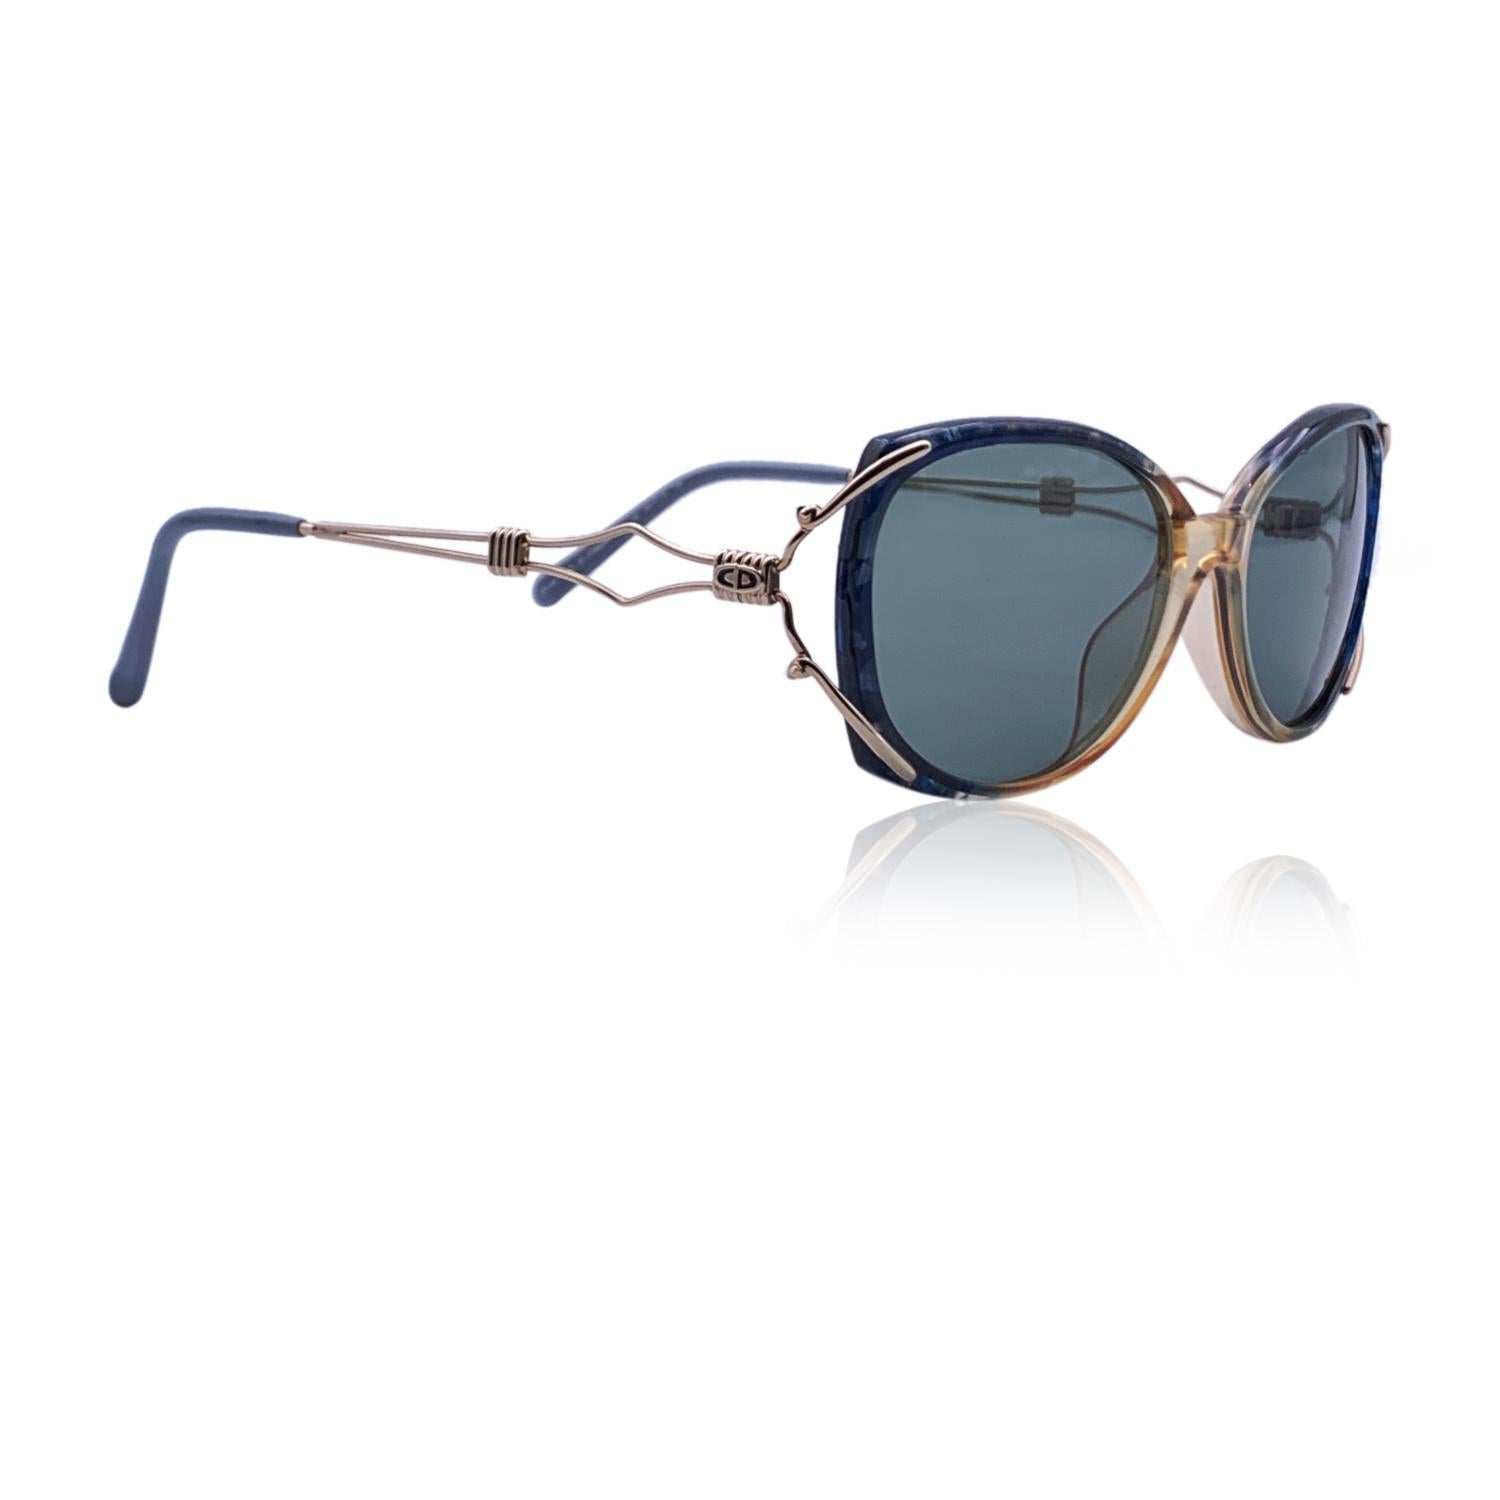 Gray Sunglasses, Christian Dior, 2667, Blue, Acetate, Women, A+ - MINT, Sunglasses, Germany, O